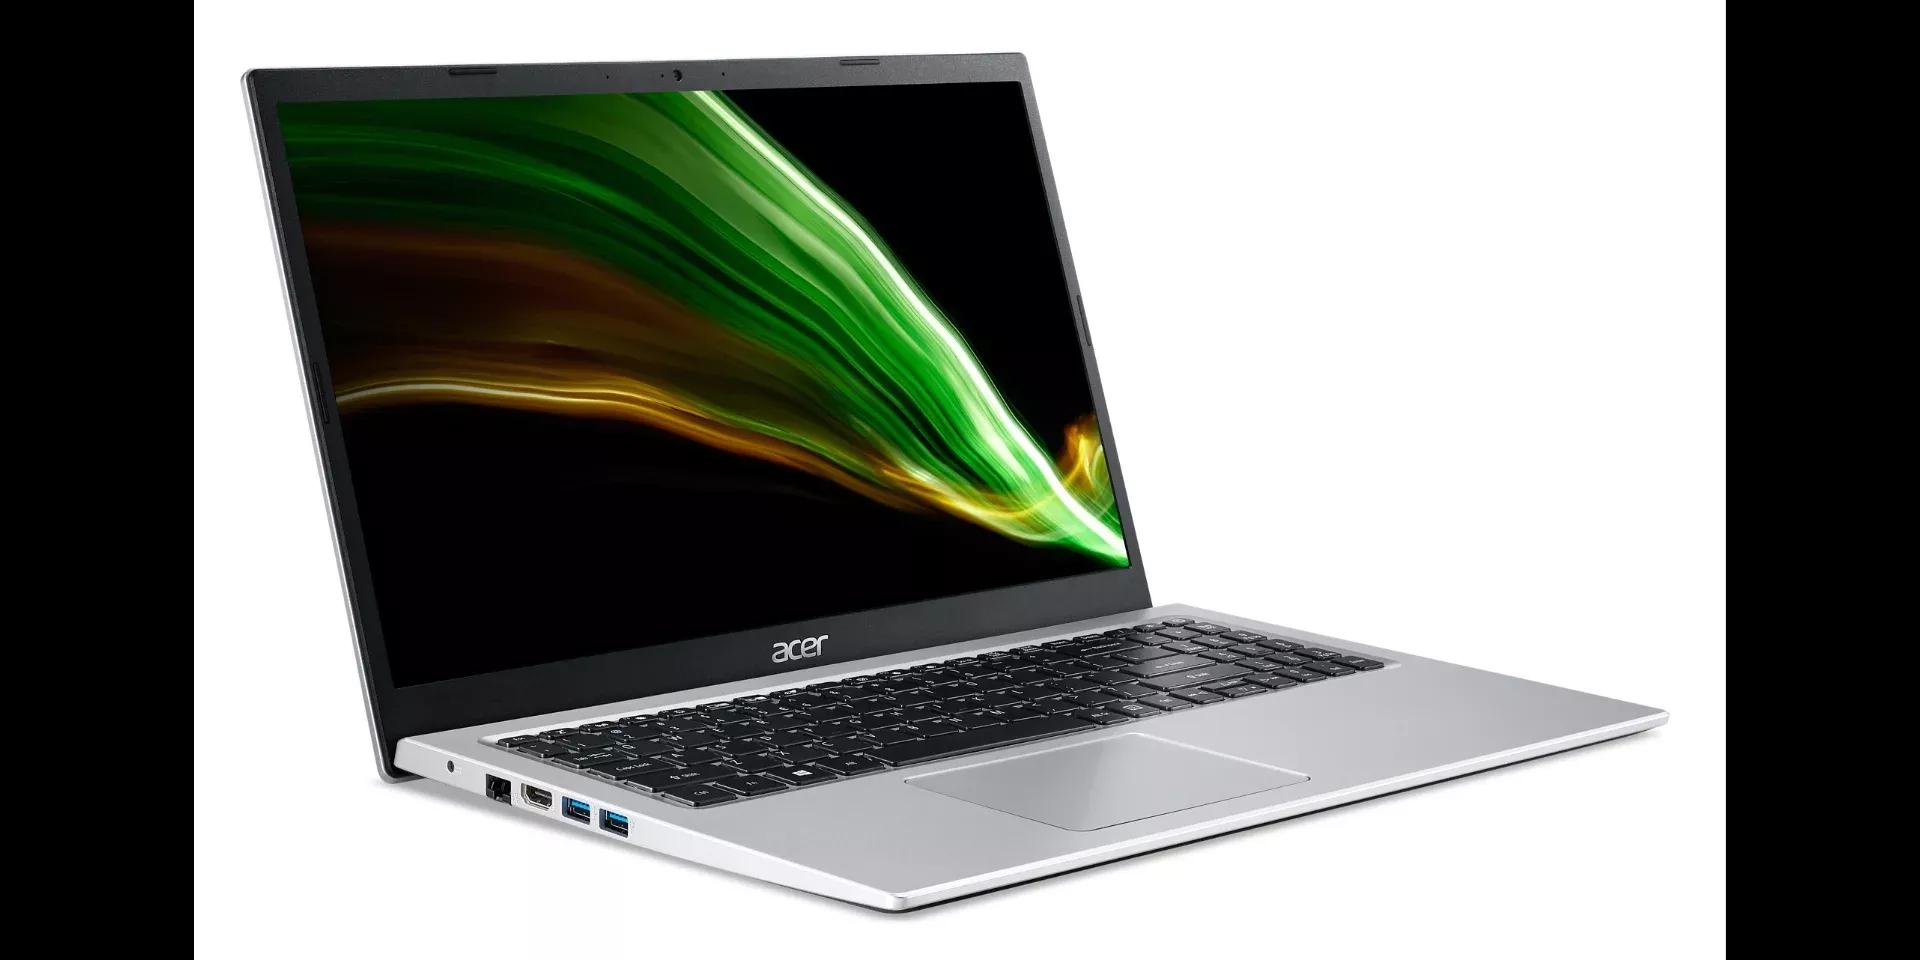 Acer Aspire 3 14 Ryzen 5 3500 / 8GB RAM / 256GB SSD / 14" HD Display